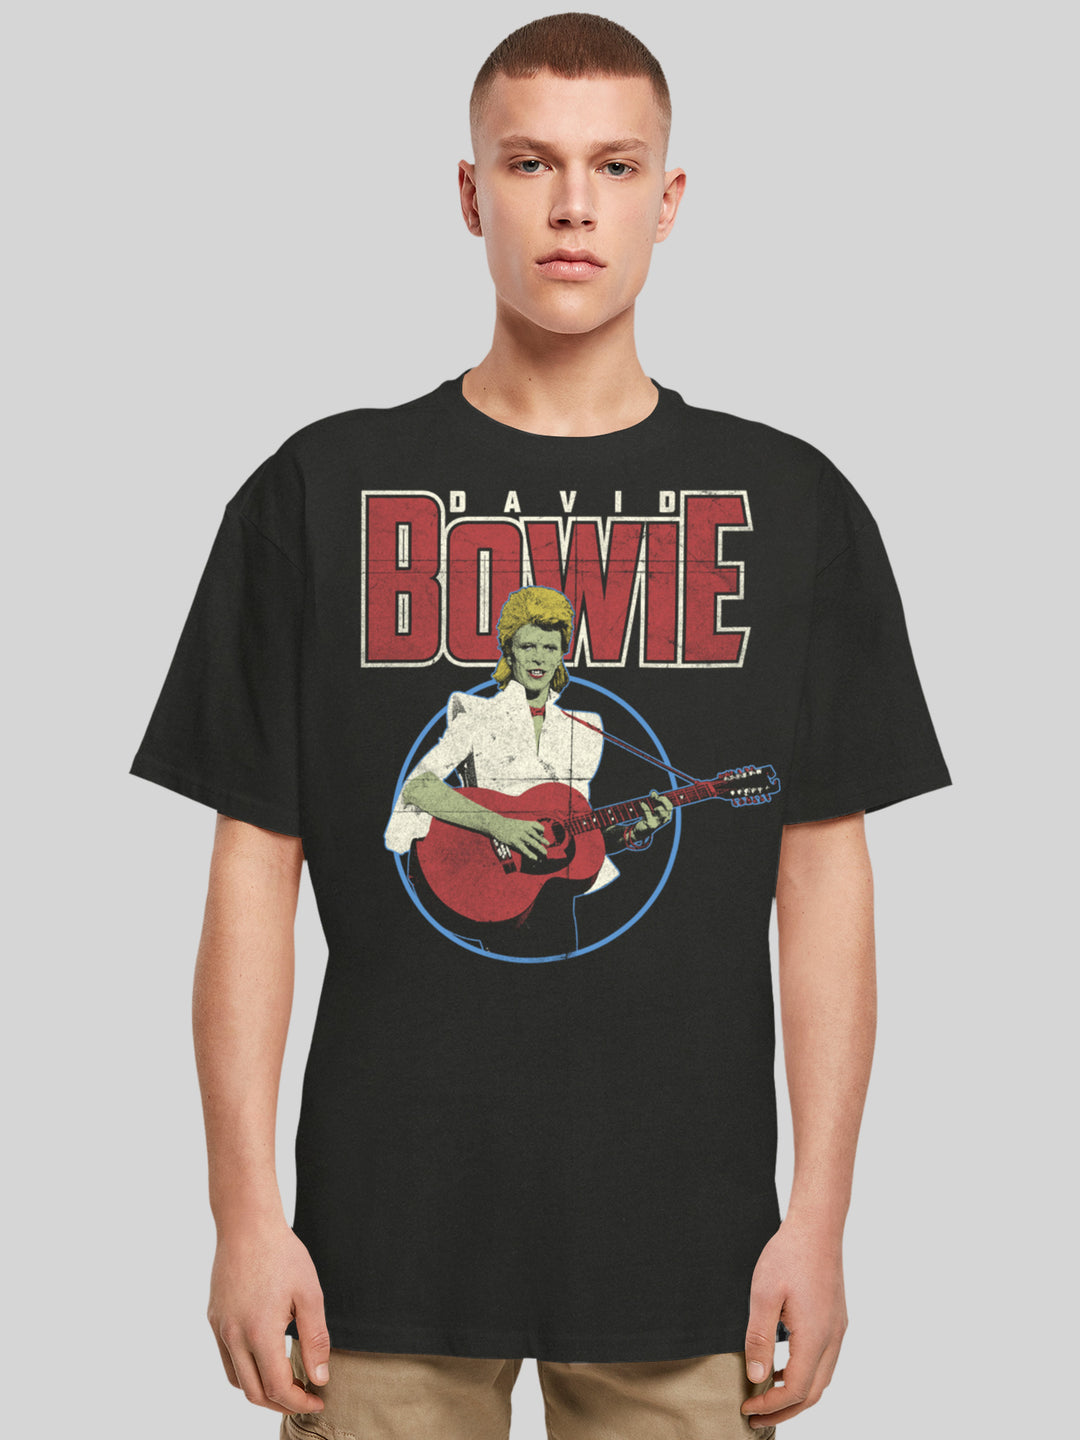 David Bowie T-Shirt | Acoustic Bootleg | Oversize Heavy Herren T Shirt